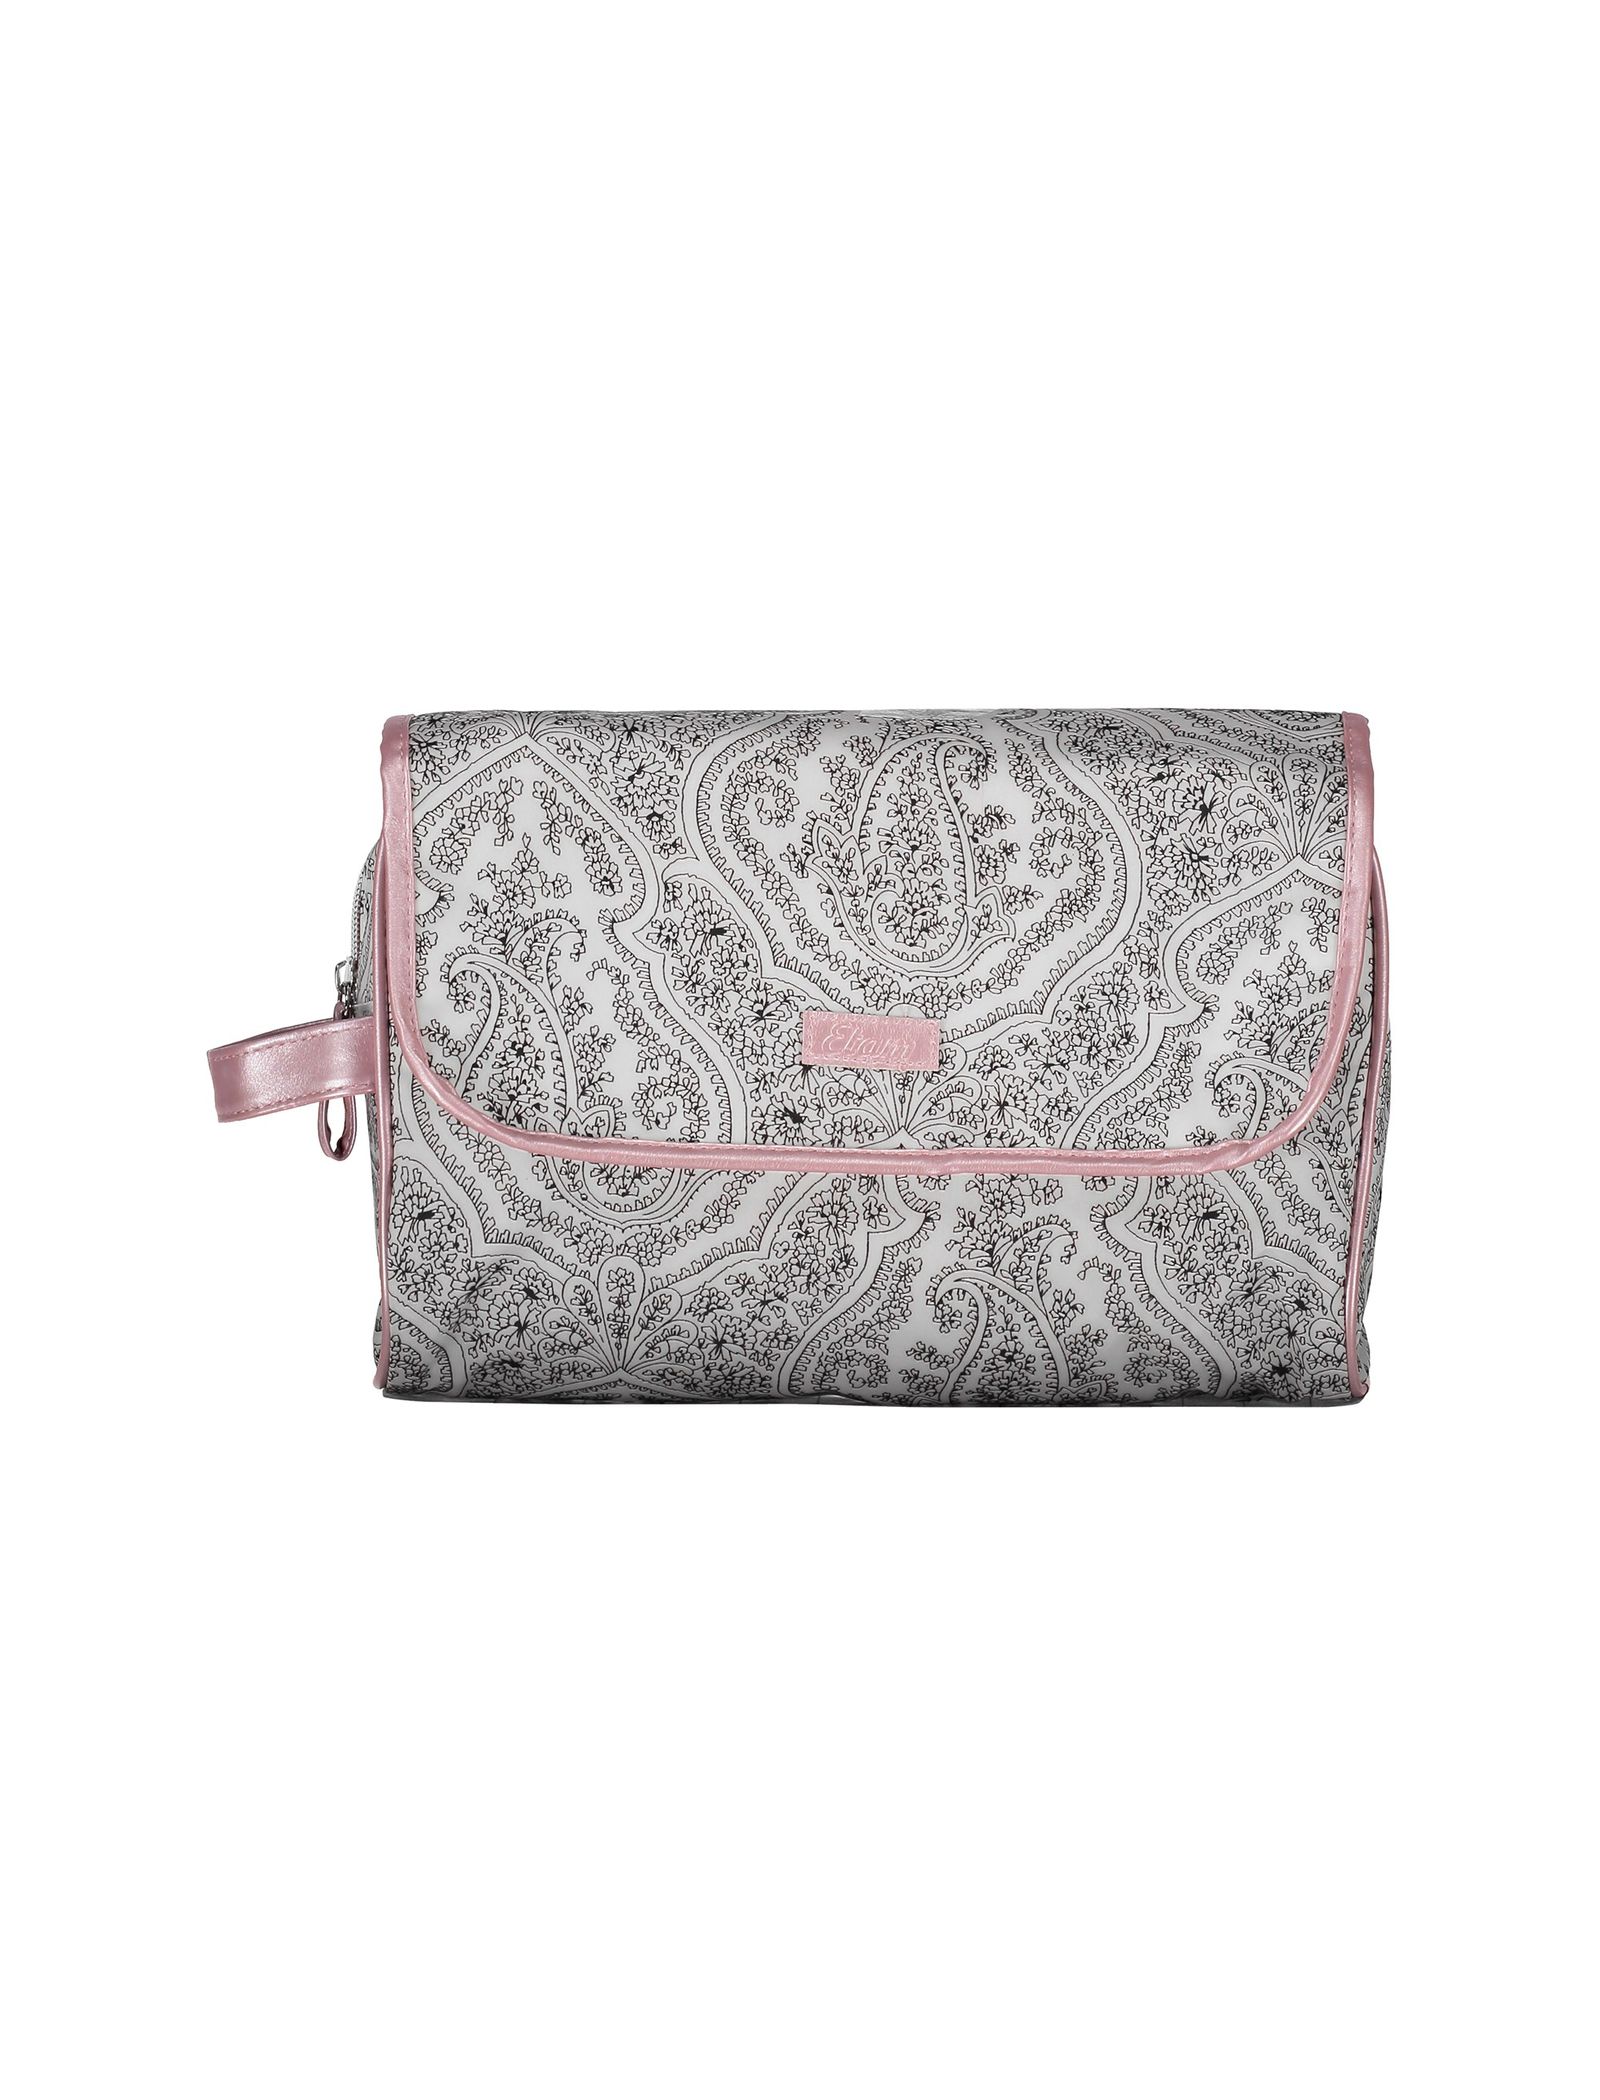 کیف لوازم آرایش زنانه - اتام - سفيد گلدار - 2